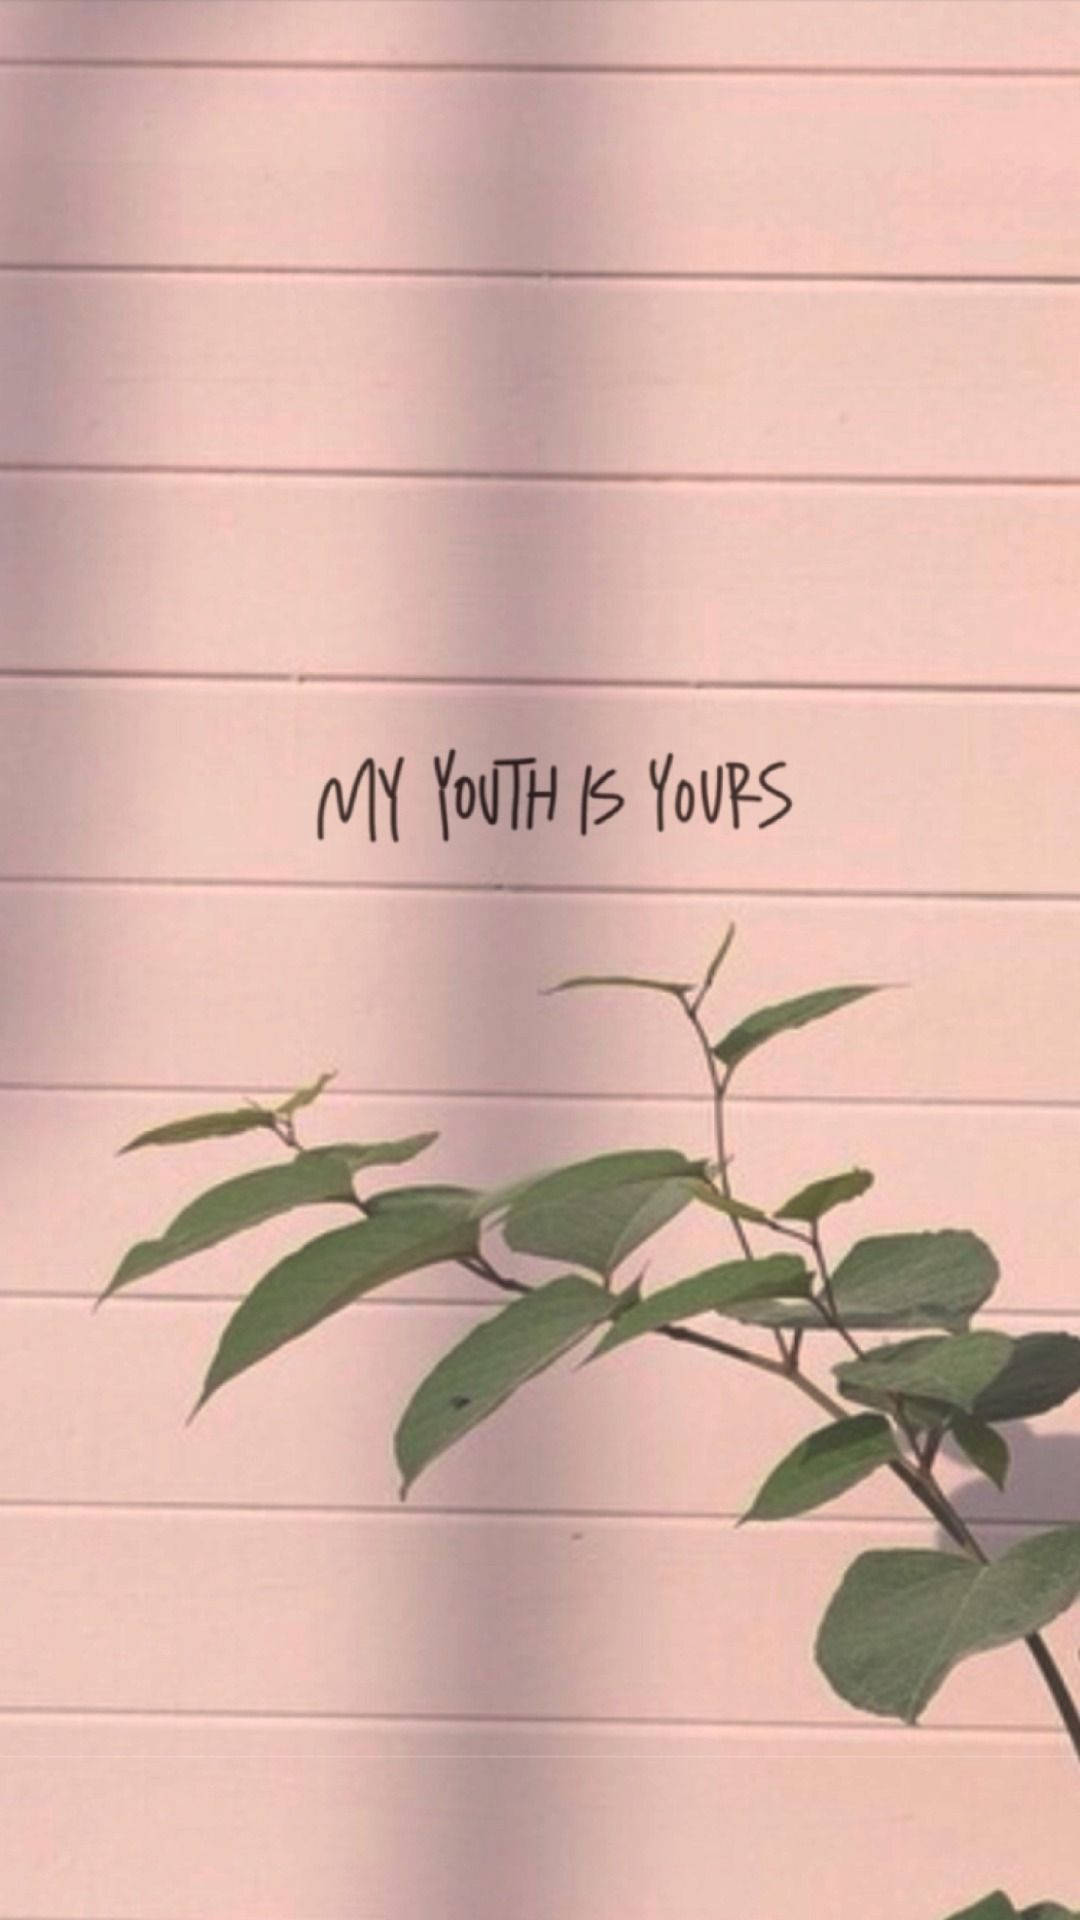 Youth Lyrics On Wall Tumblr Aesthetic Wallpaper